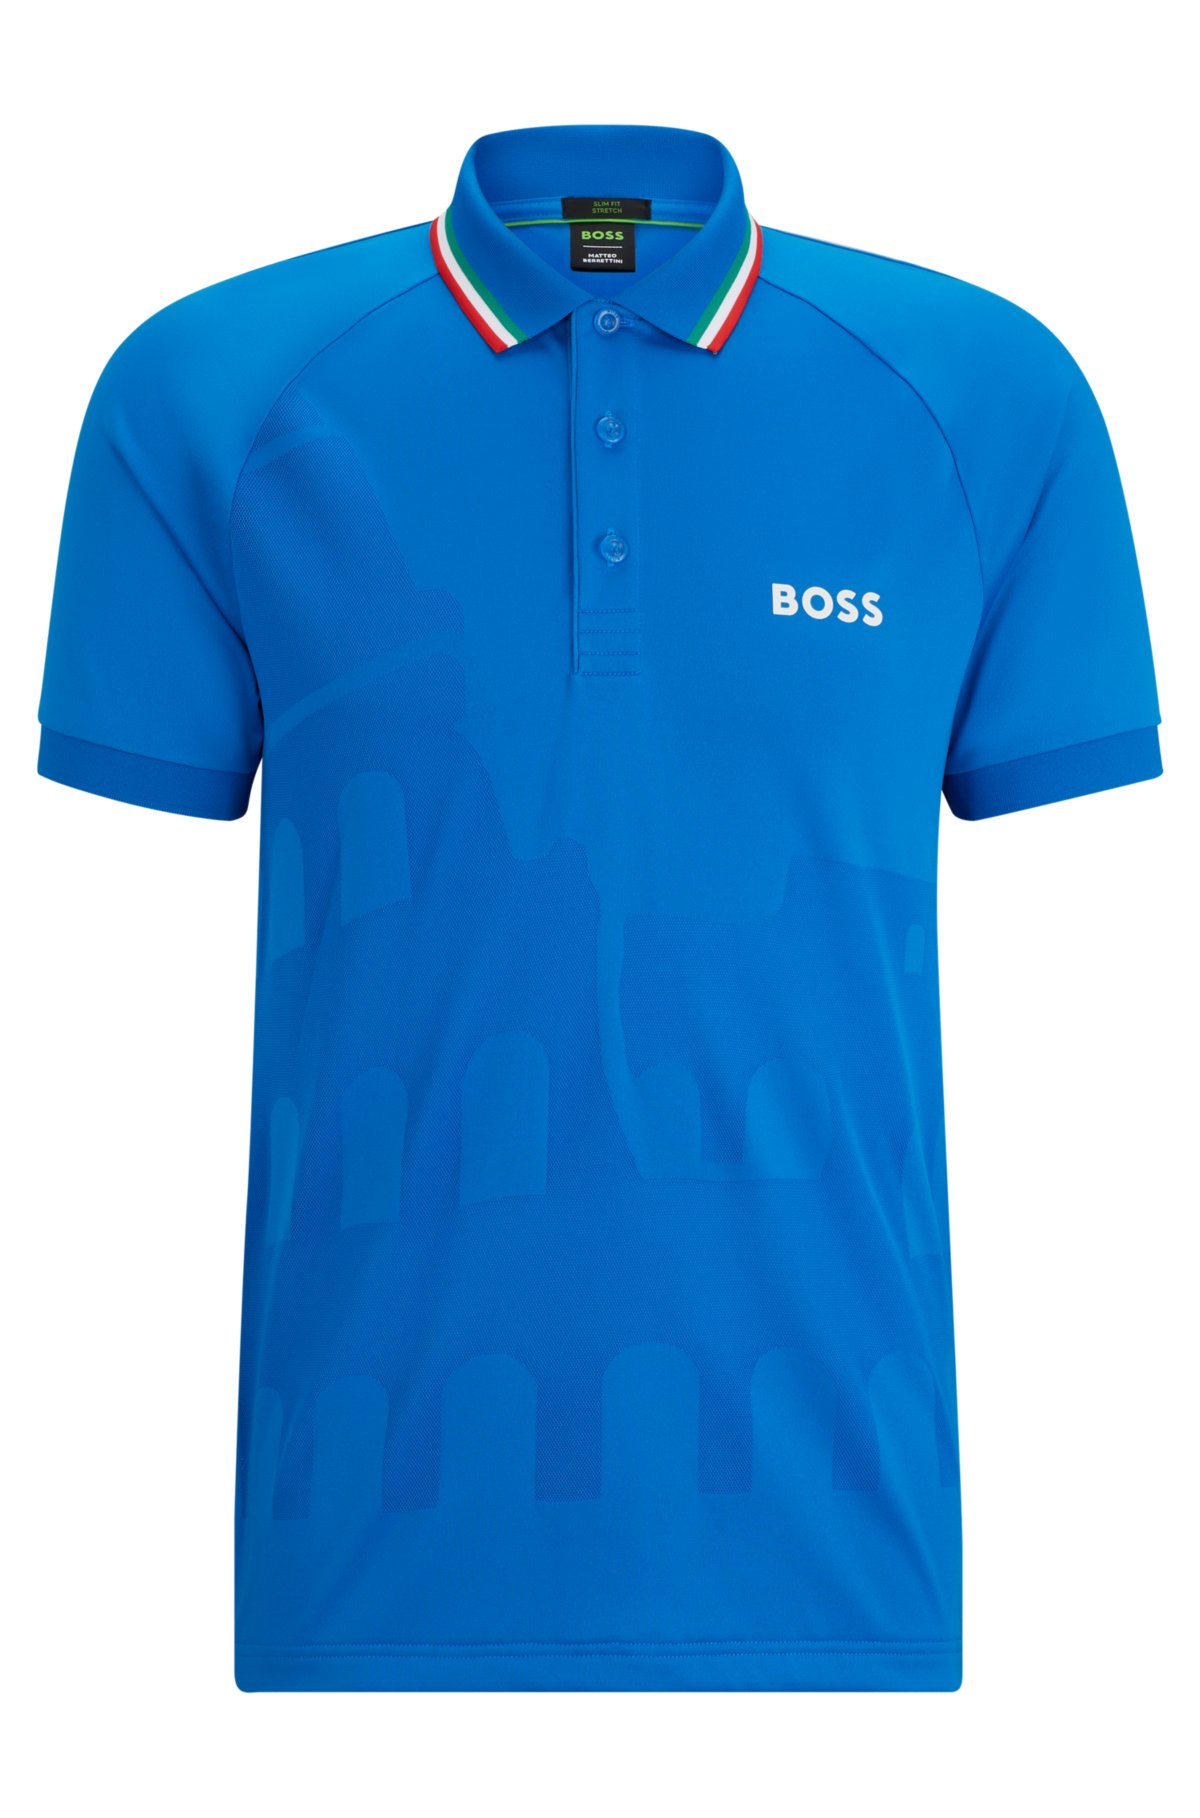 BOSS x MATTEO BERRETTINI slim-fit polo shirt in engineered jacquard jersey, Blue